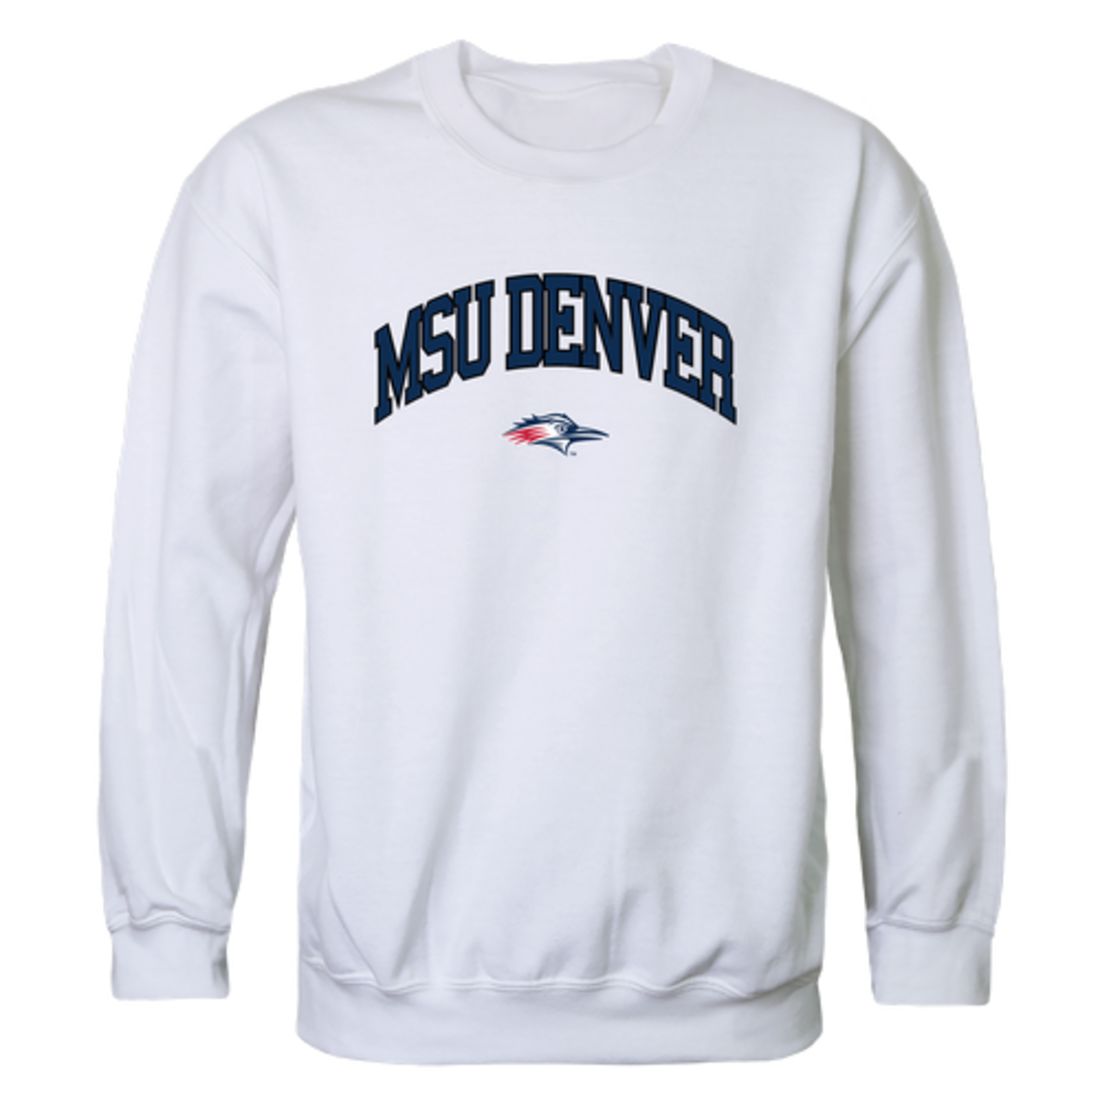 Metropolitan State University of Denver Roadrunners Campus Crewneck Sweatshirt